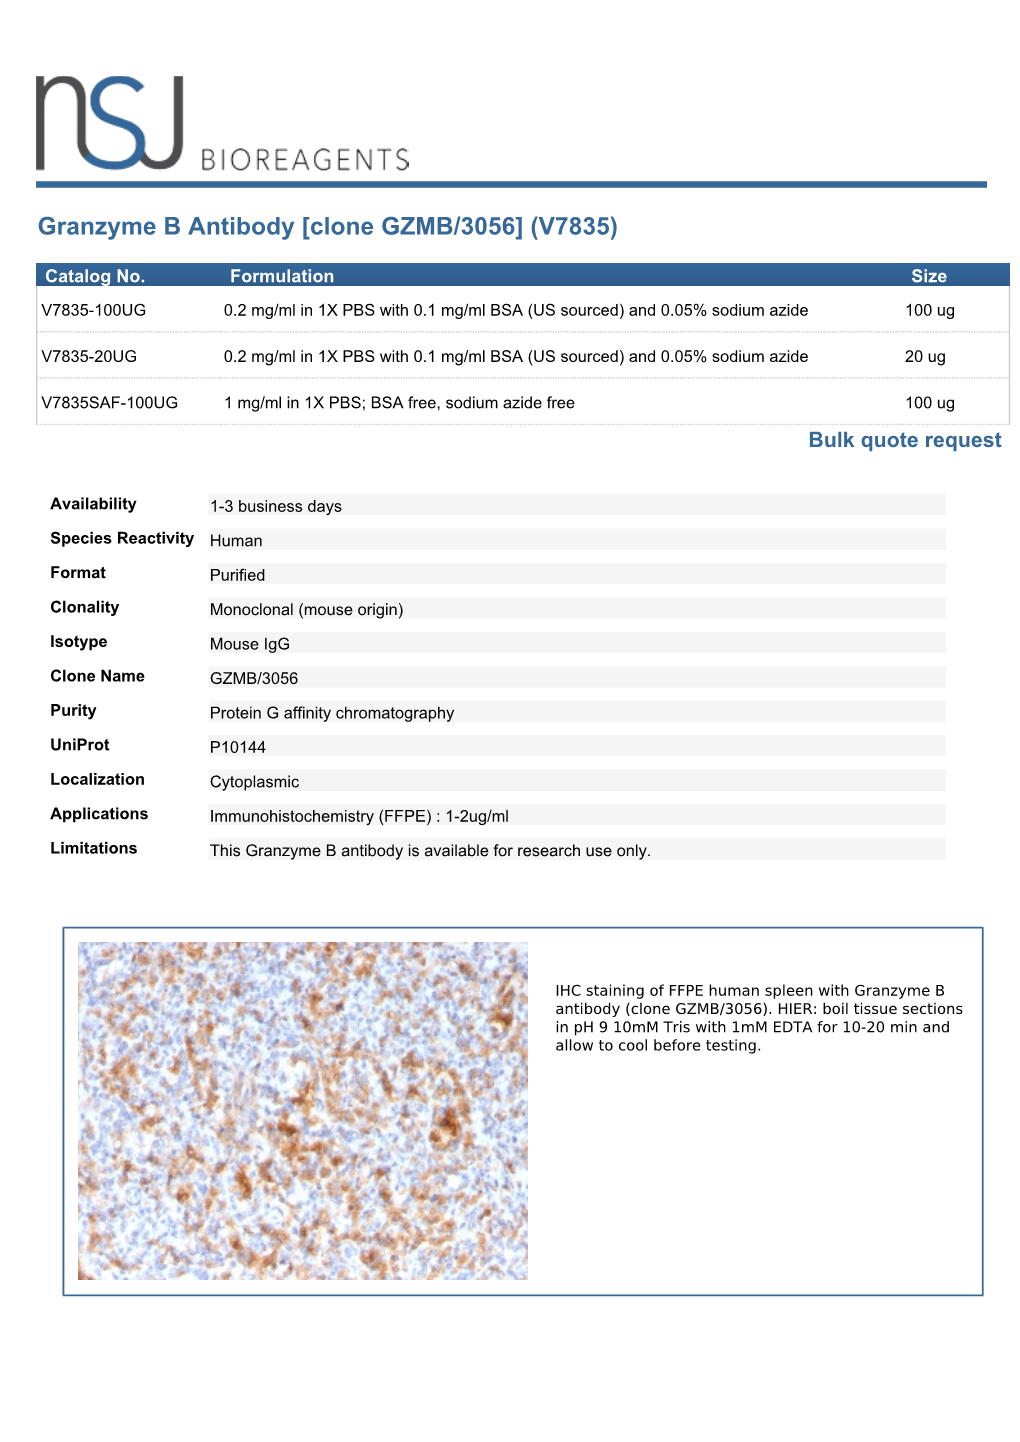 Granzyme B Antibody [Clone GZMB/3056] (V7835)